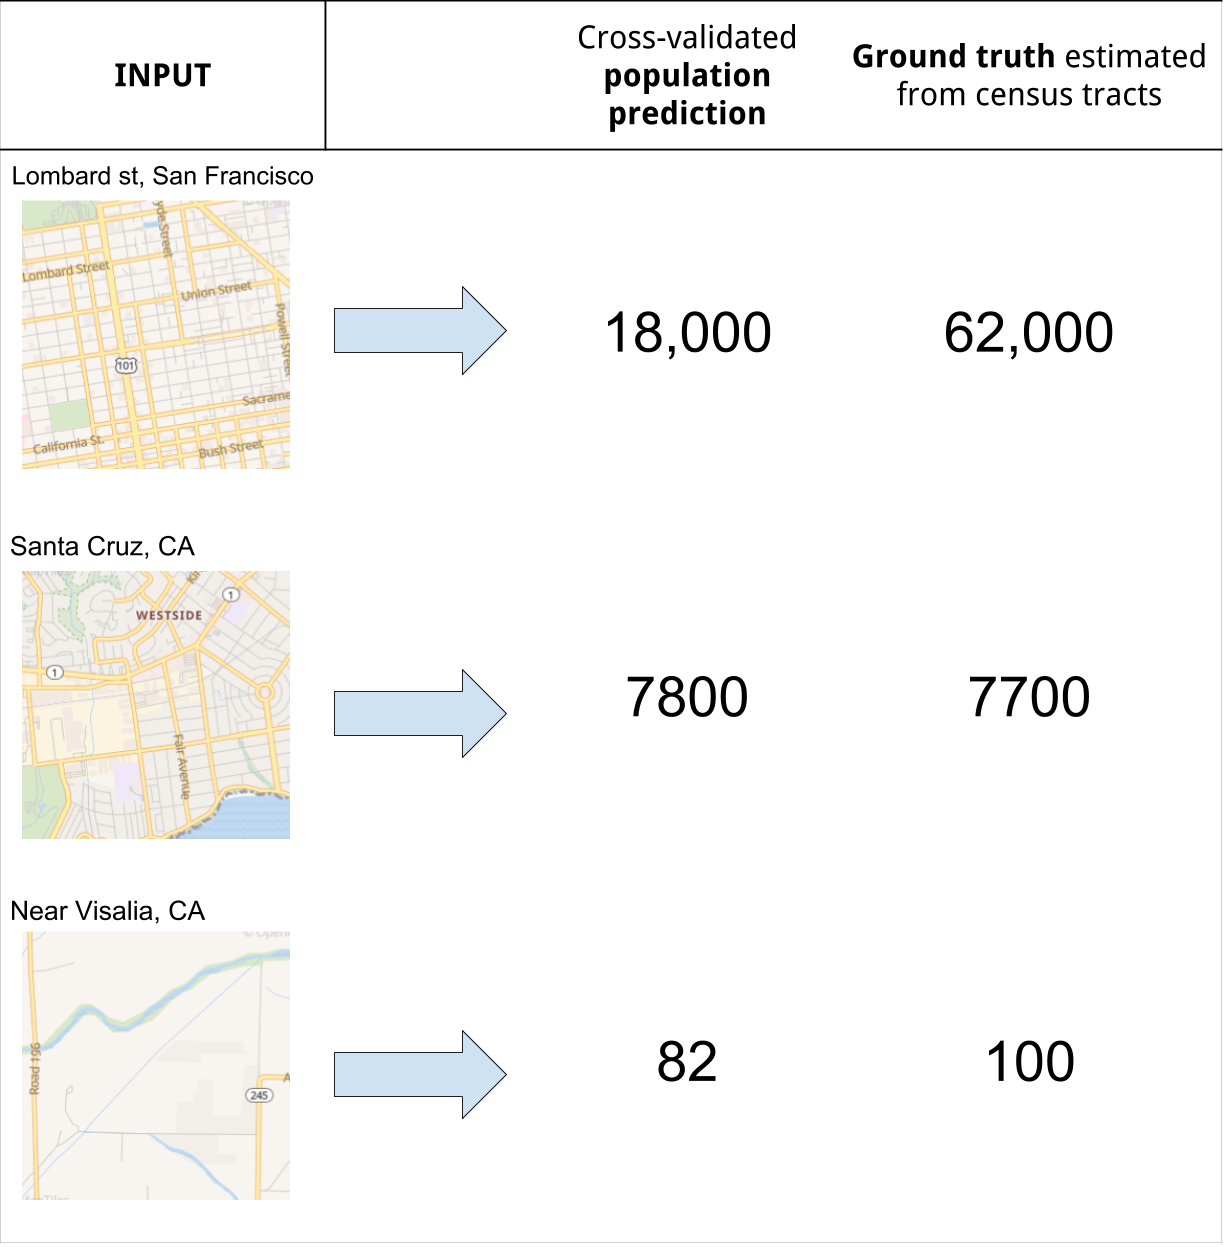 Estimating population using openstreetmap tiles